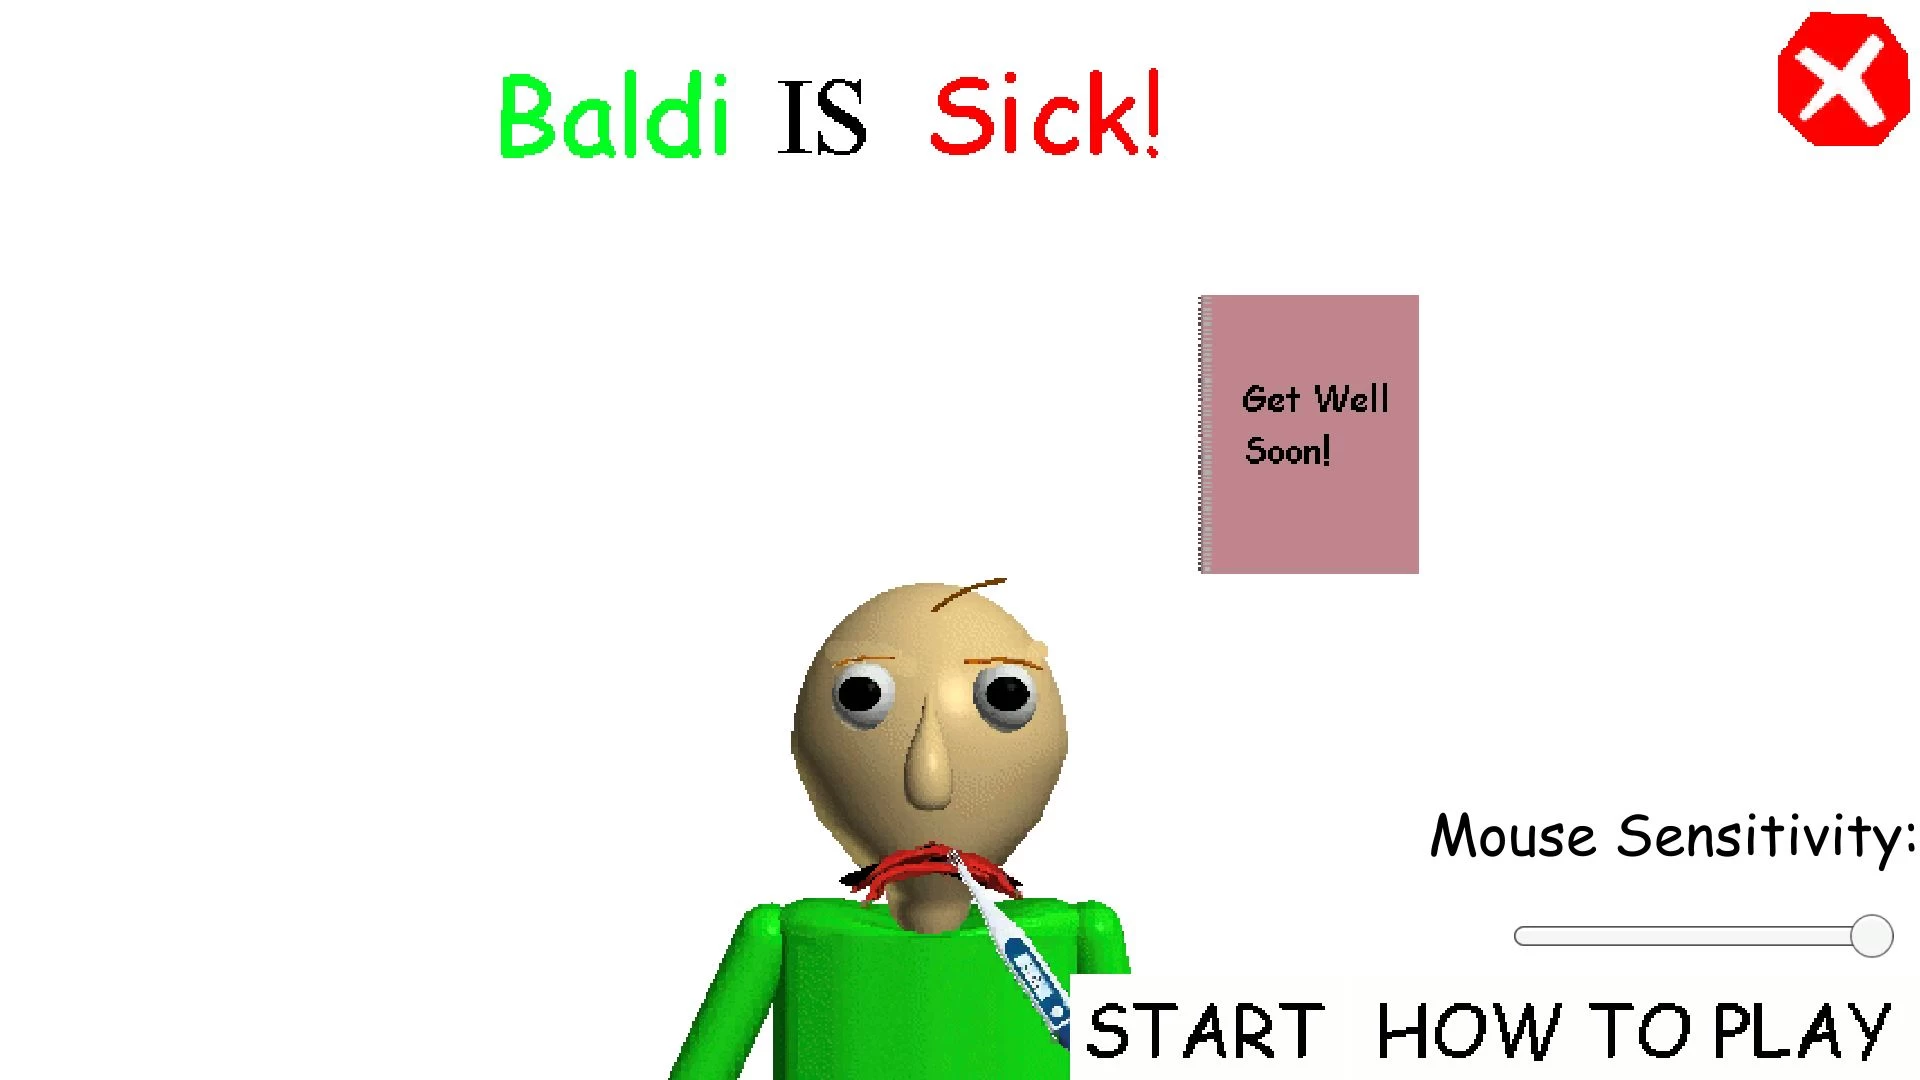 Baldi's Basic In Notebook Contest! [Baldi's Basics] [Mods]